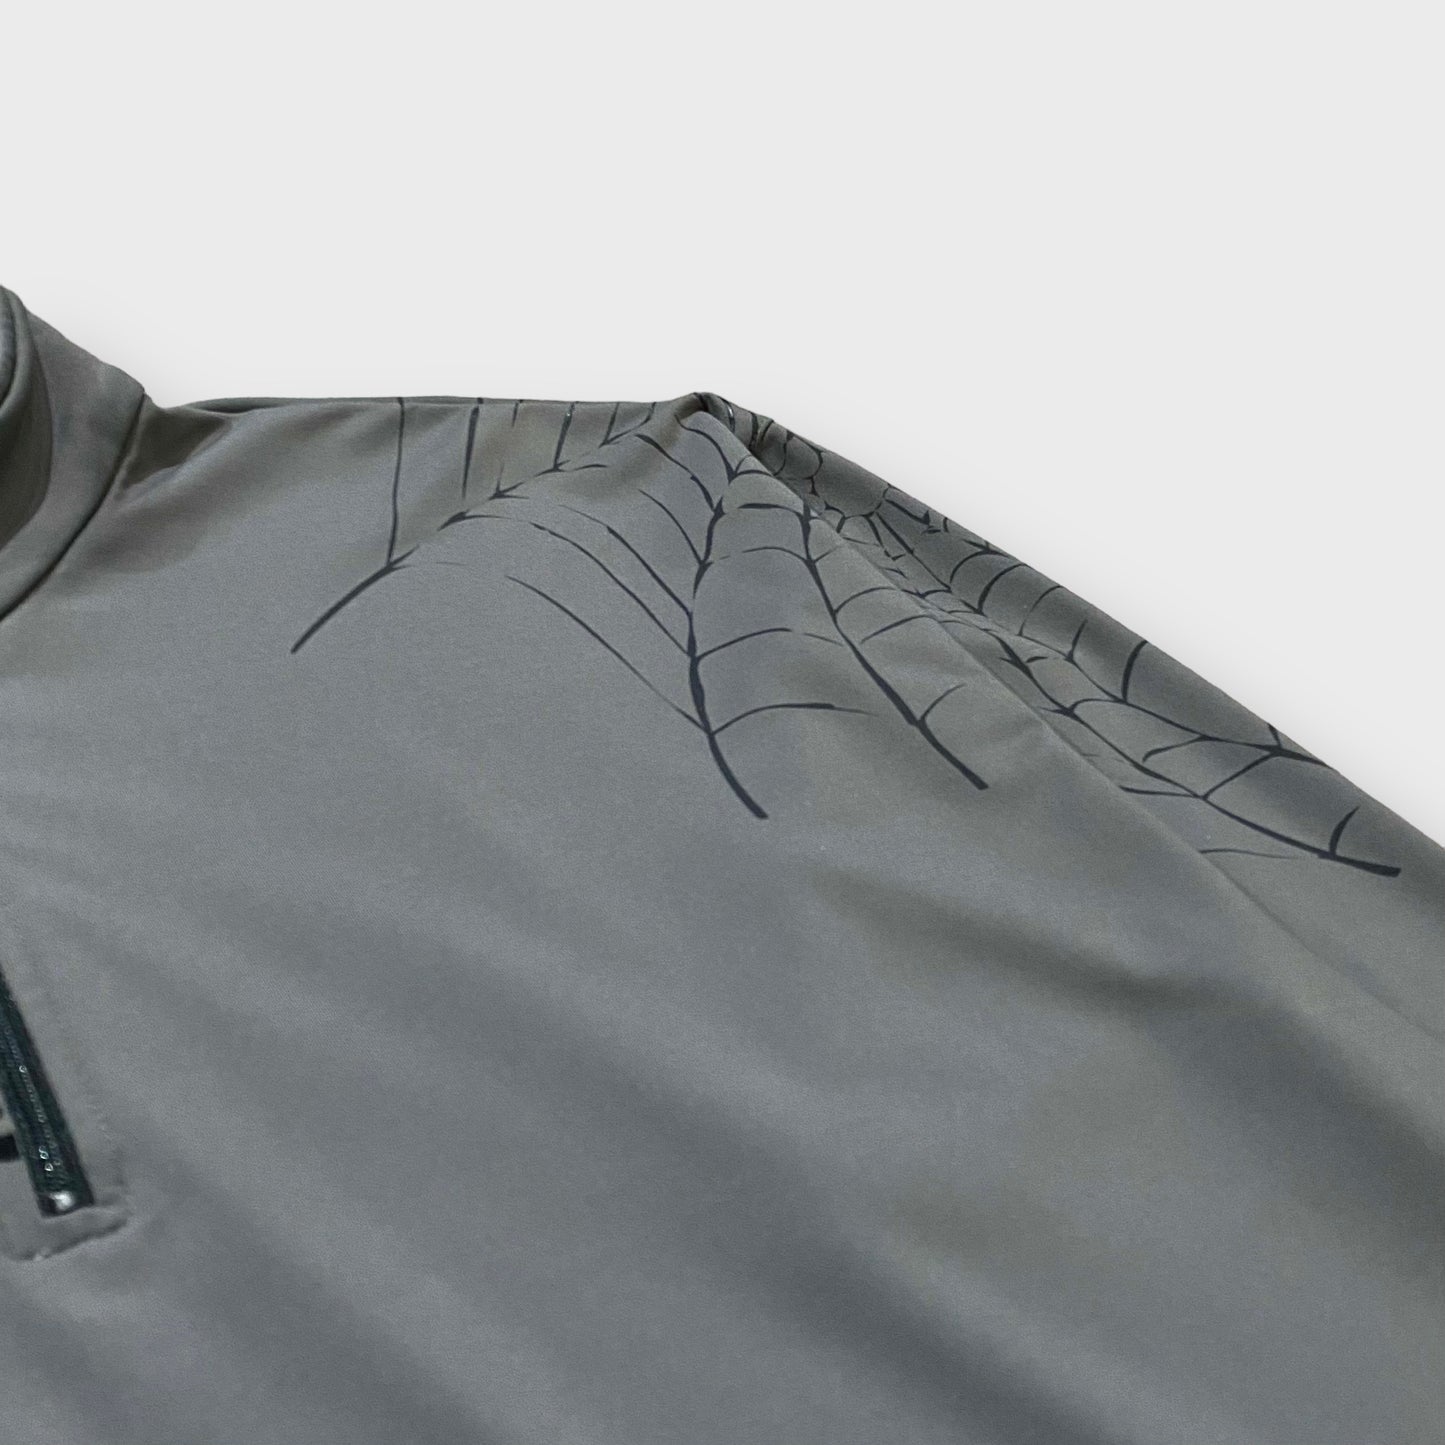 "SPYDER" Spyder design polyester half zip top